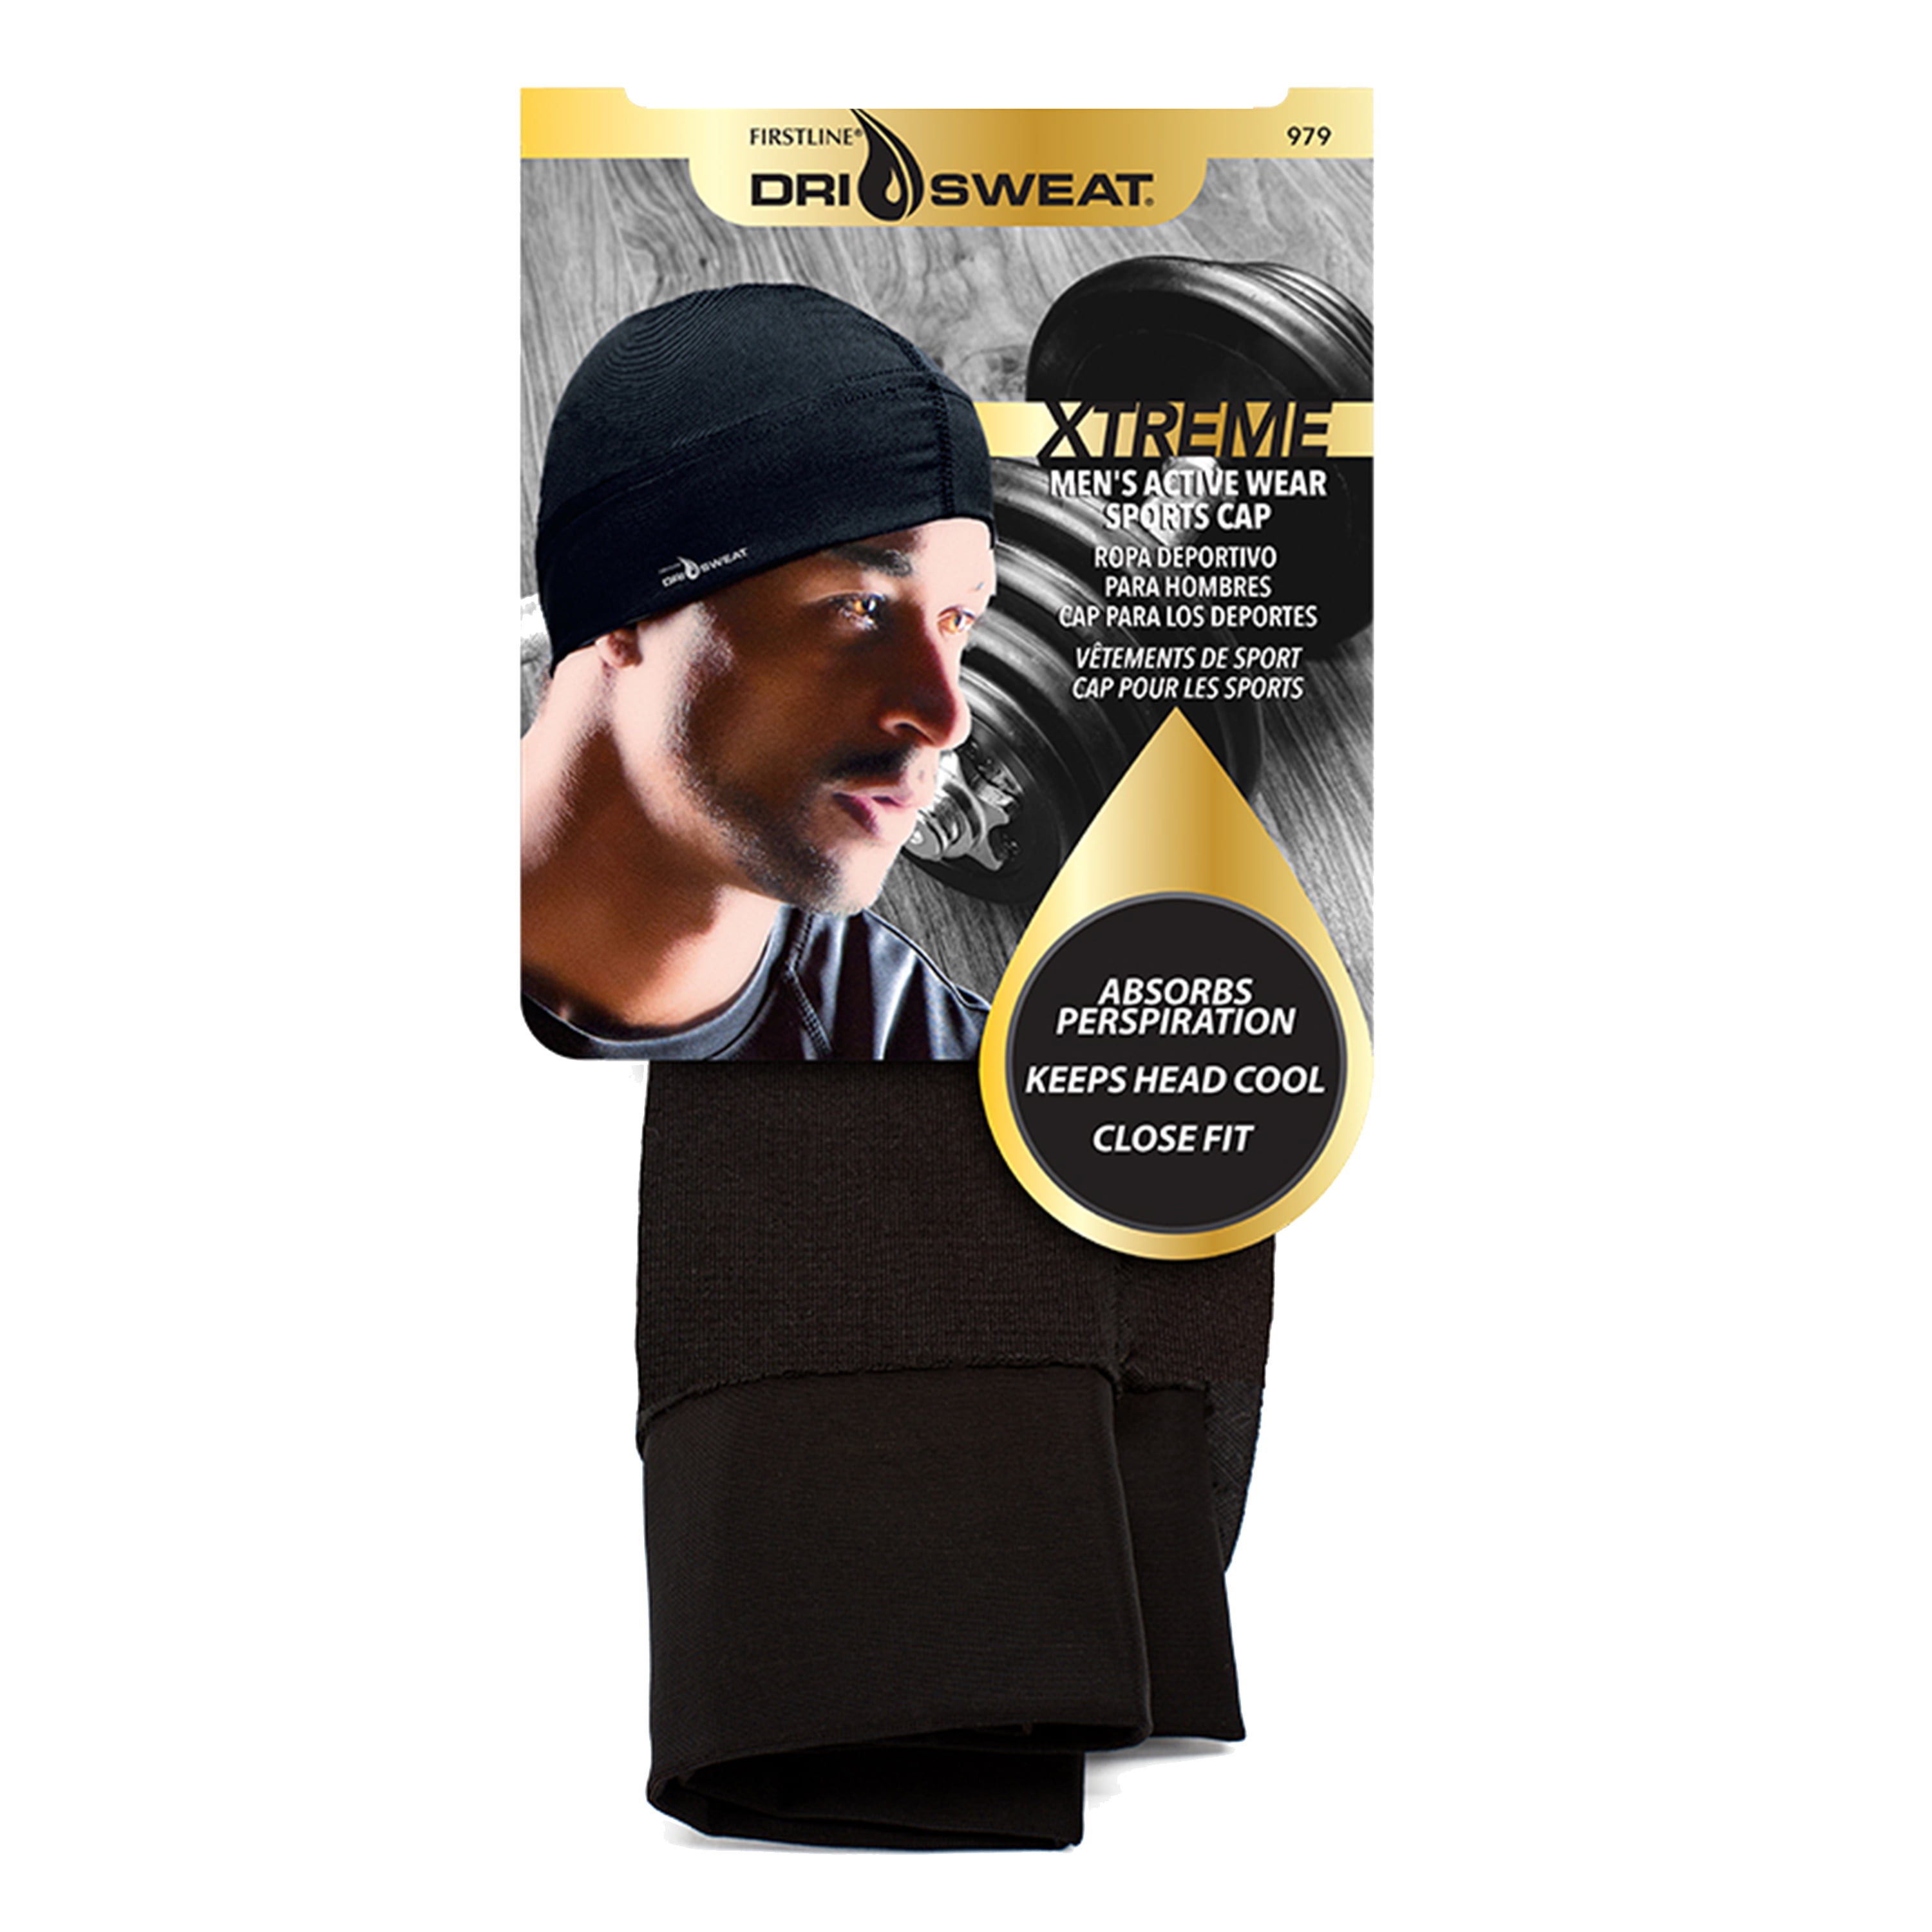 Dri Sweat Xtreme Men's Active Wear Sports Cap, Black 